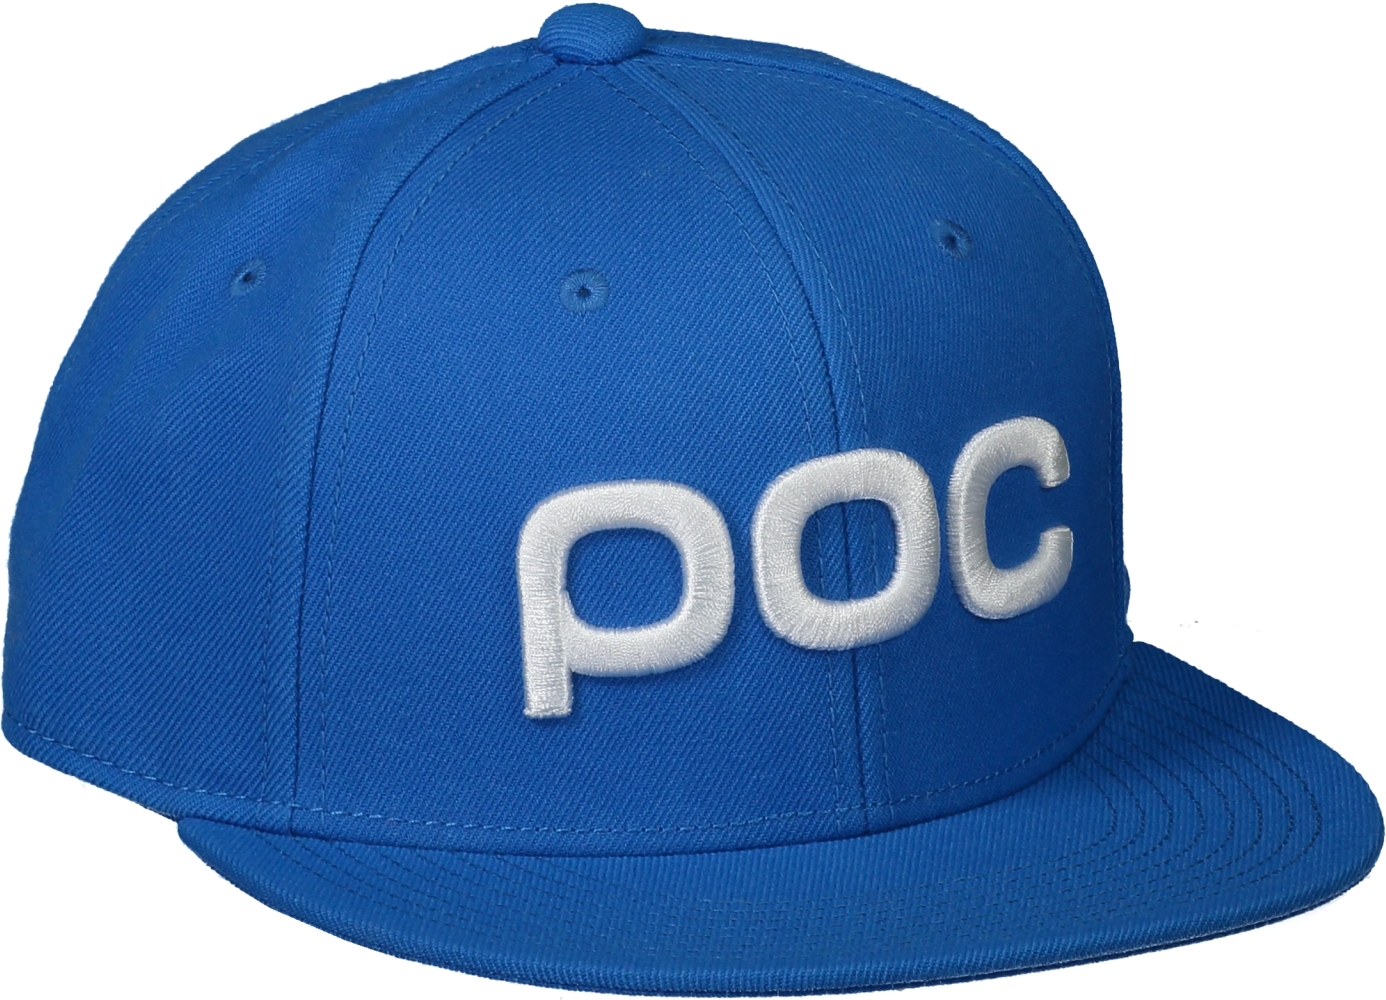 POC POC Corp Cap Jr - Natrium Blue 54